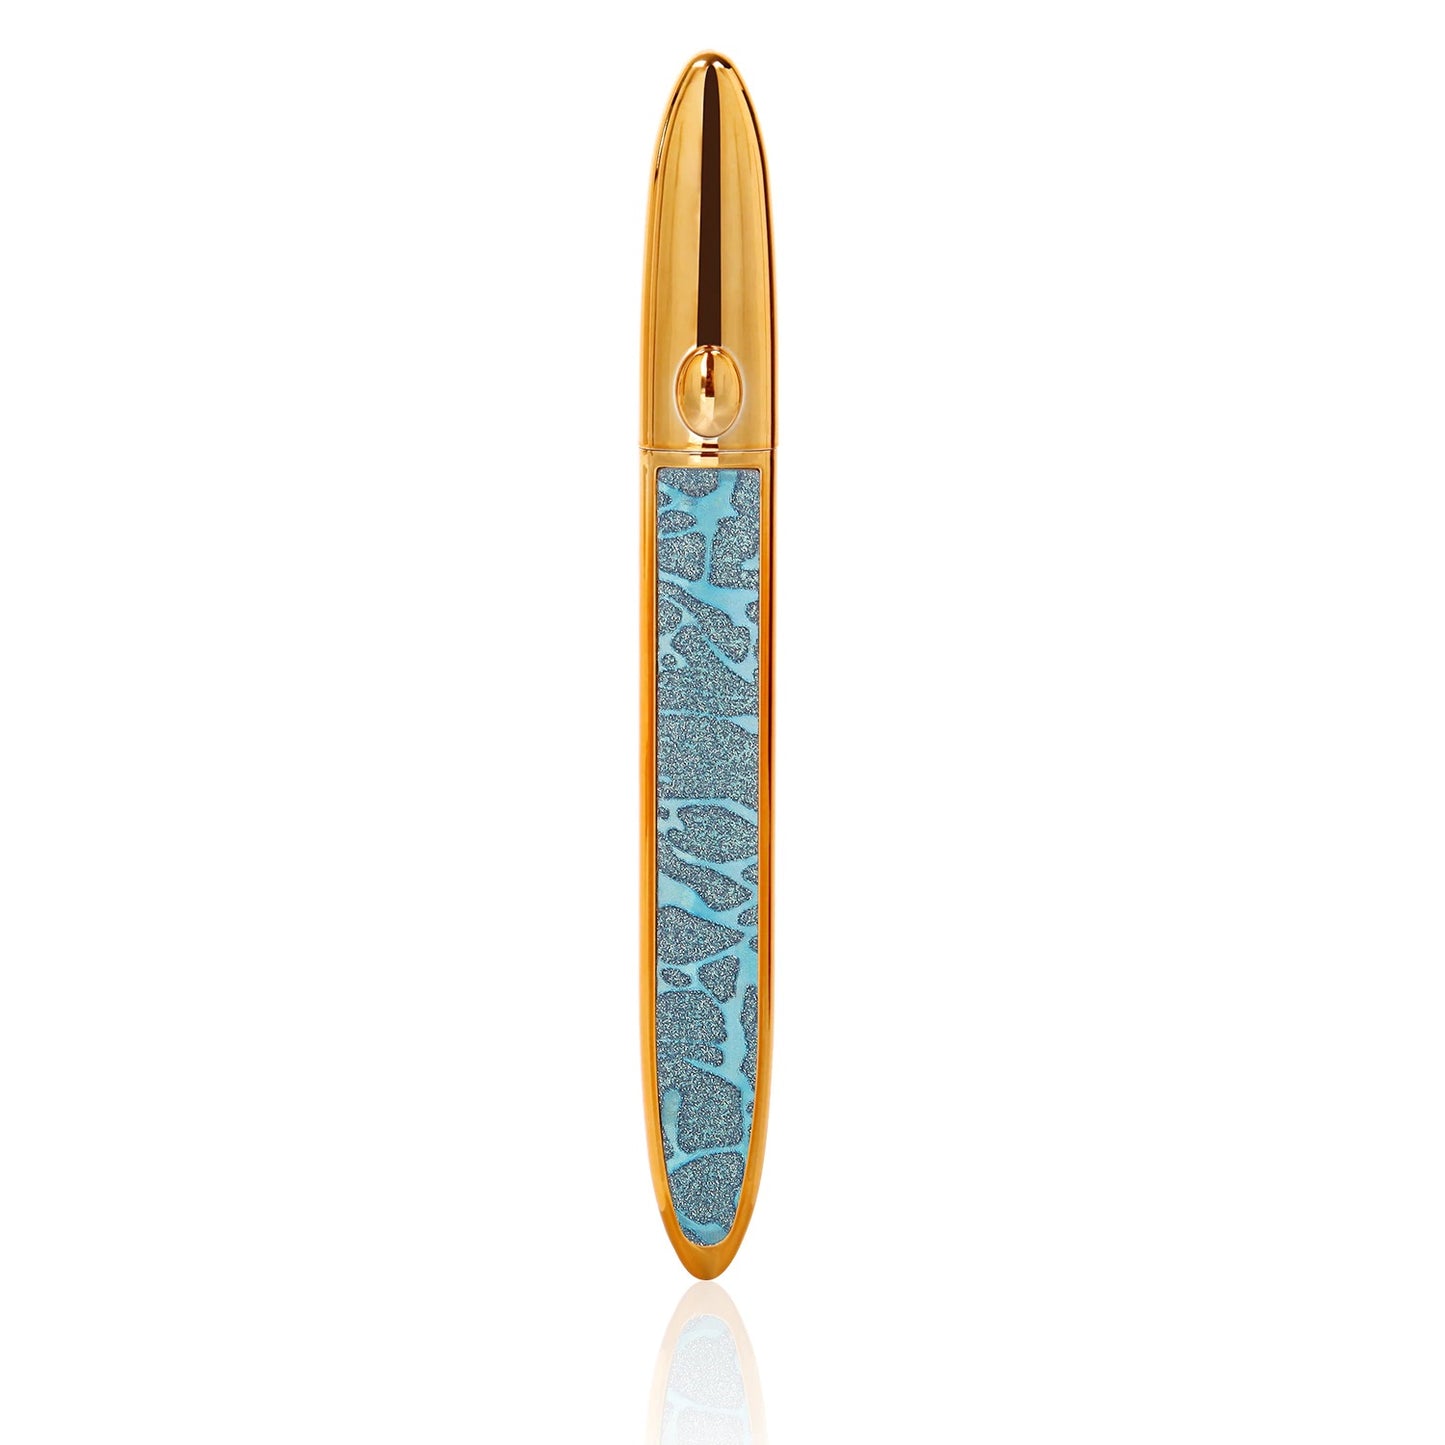 Self-adhesive Waterproof Liquid Eyeliner Pencil - SixtyKey new model design Dubai fashion style 2021 best price